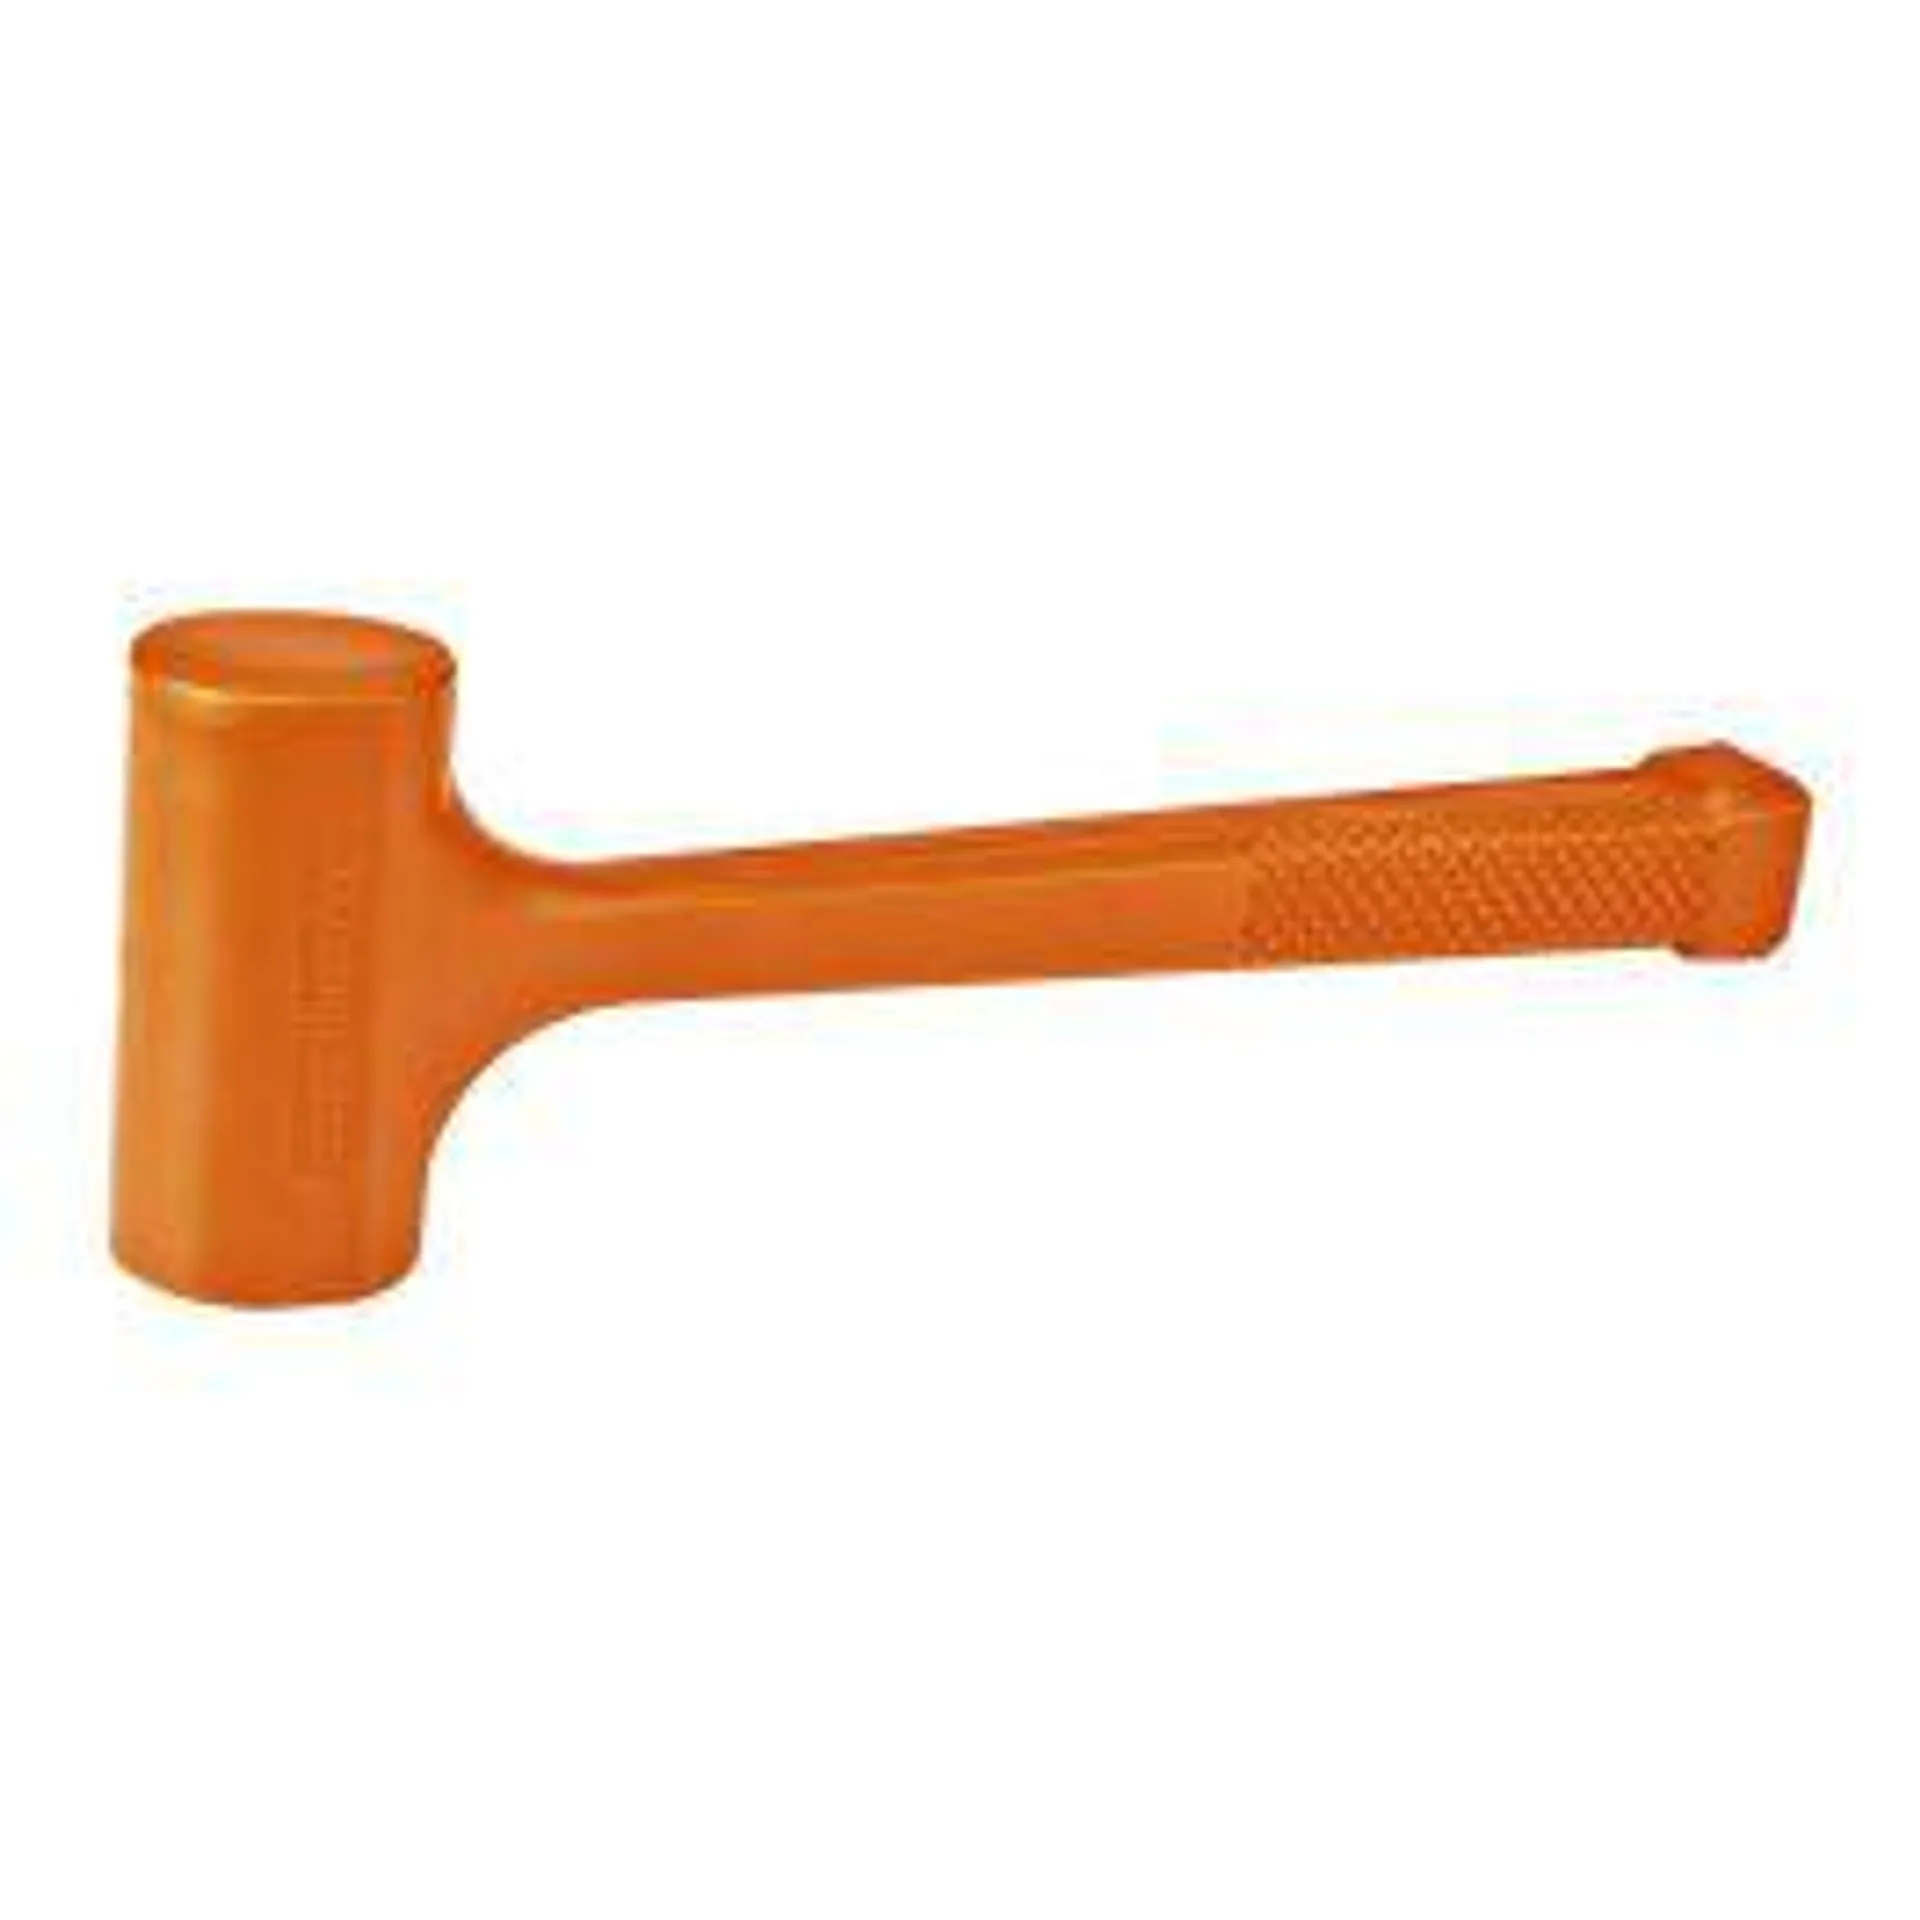 2 lb. Neon Orange Dead Blow Hammer